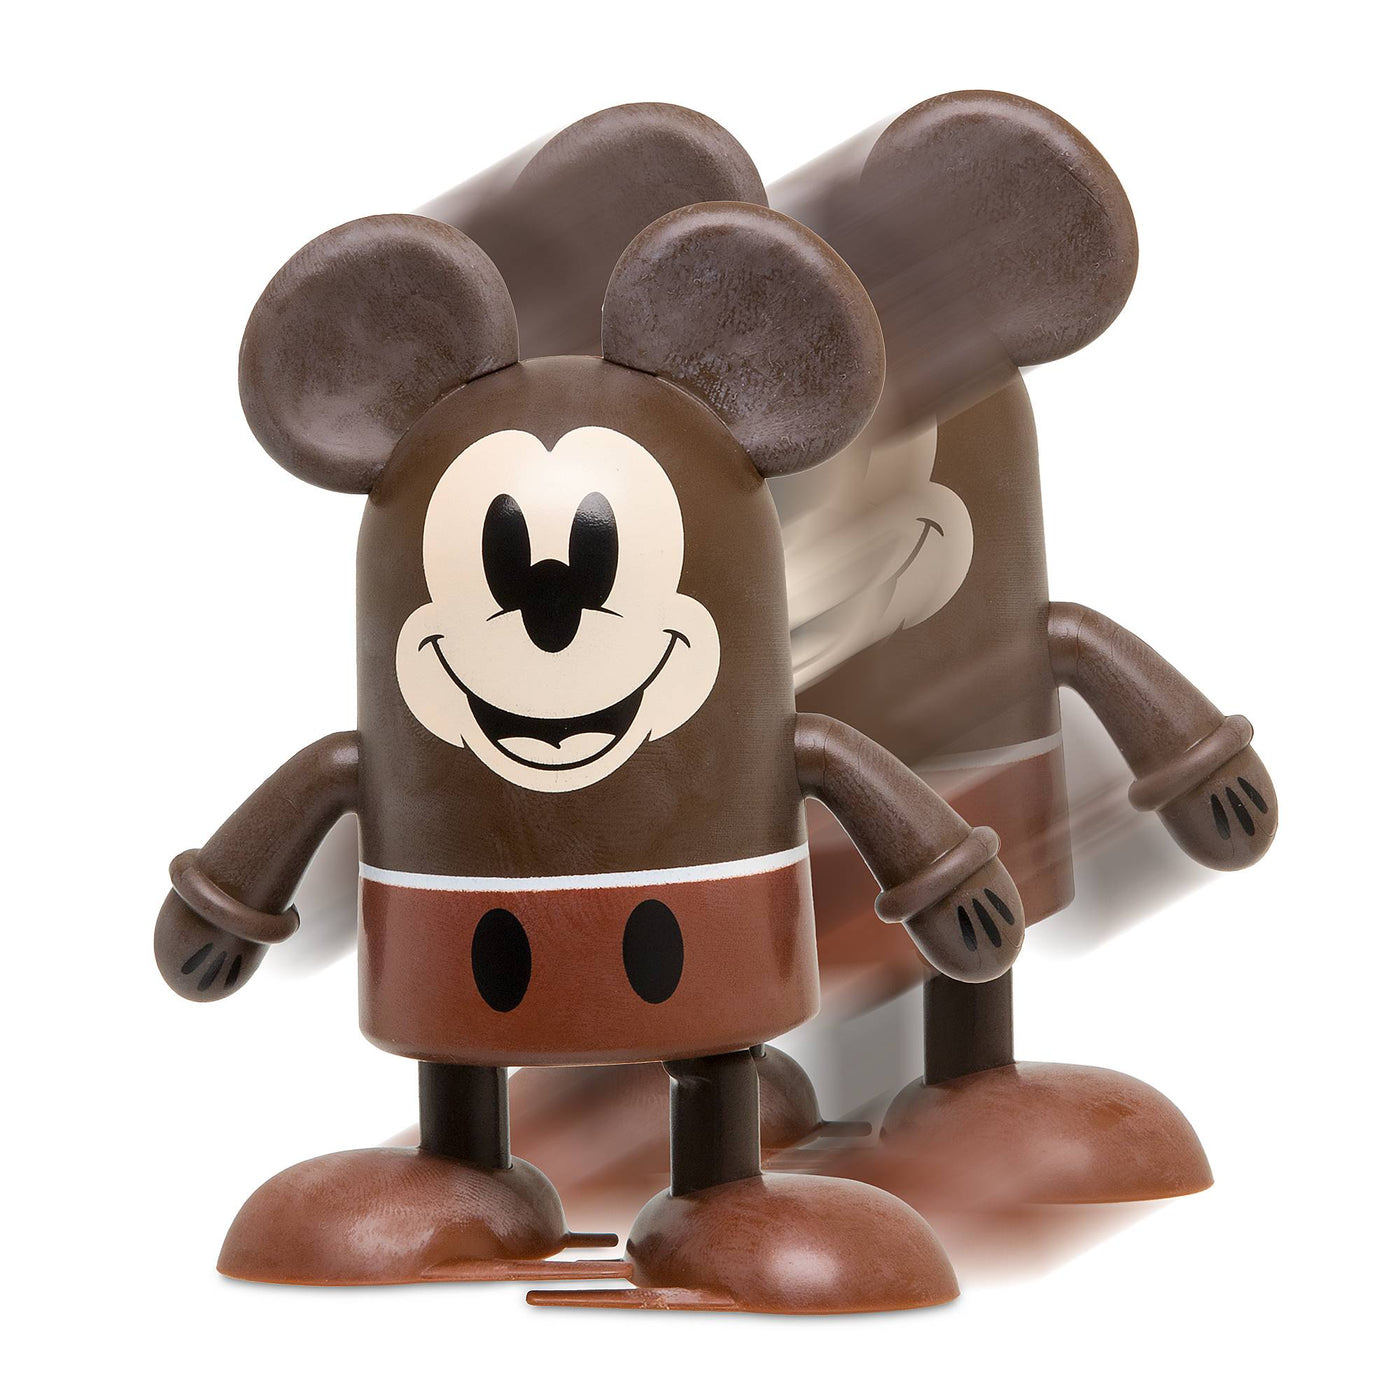 Disney Mickey Mouse Memories Shufflerz Walking Figure 4 New with Box